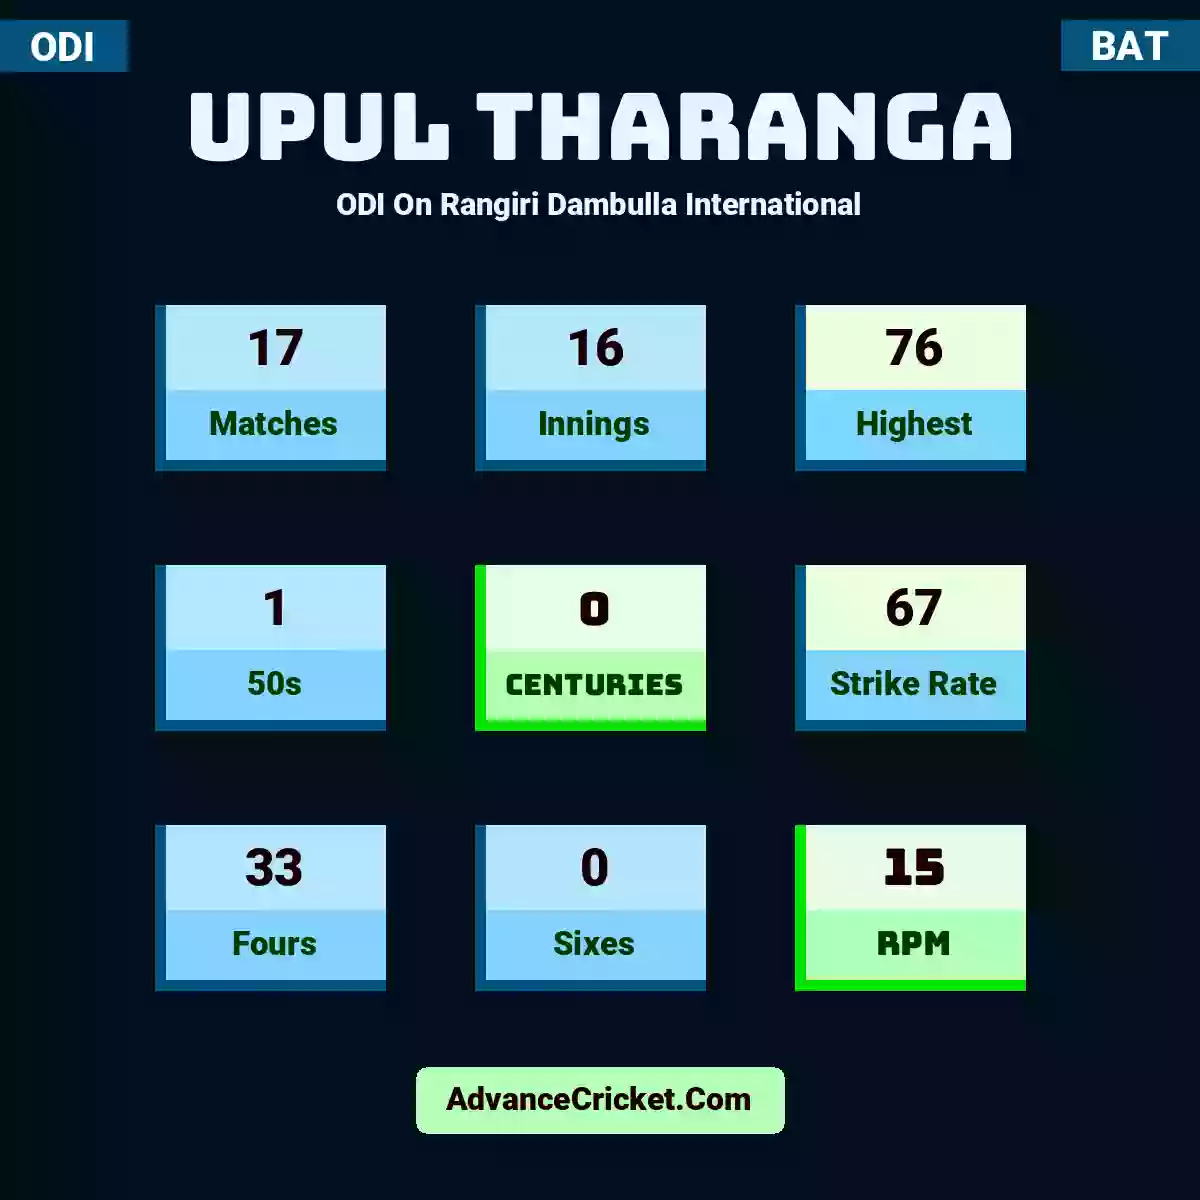 Upul Tharanga ODI  On Rangiri Dambulla International, Upul Tharanga played 17 matches, scored 76 runs as highest, 1 half-centuries, and 0 centuries, with a strike rate of 67. U.Tharanga hit 33 fours and 0 sixes, with an RPM of 15.